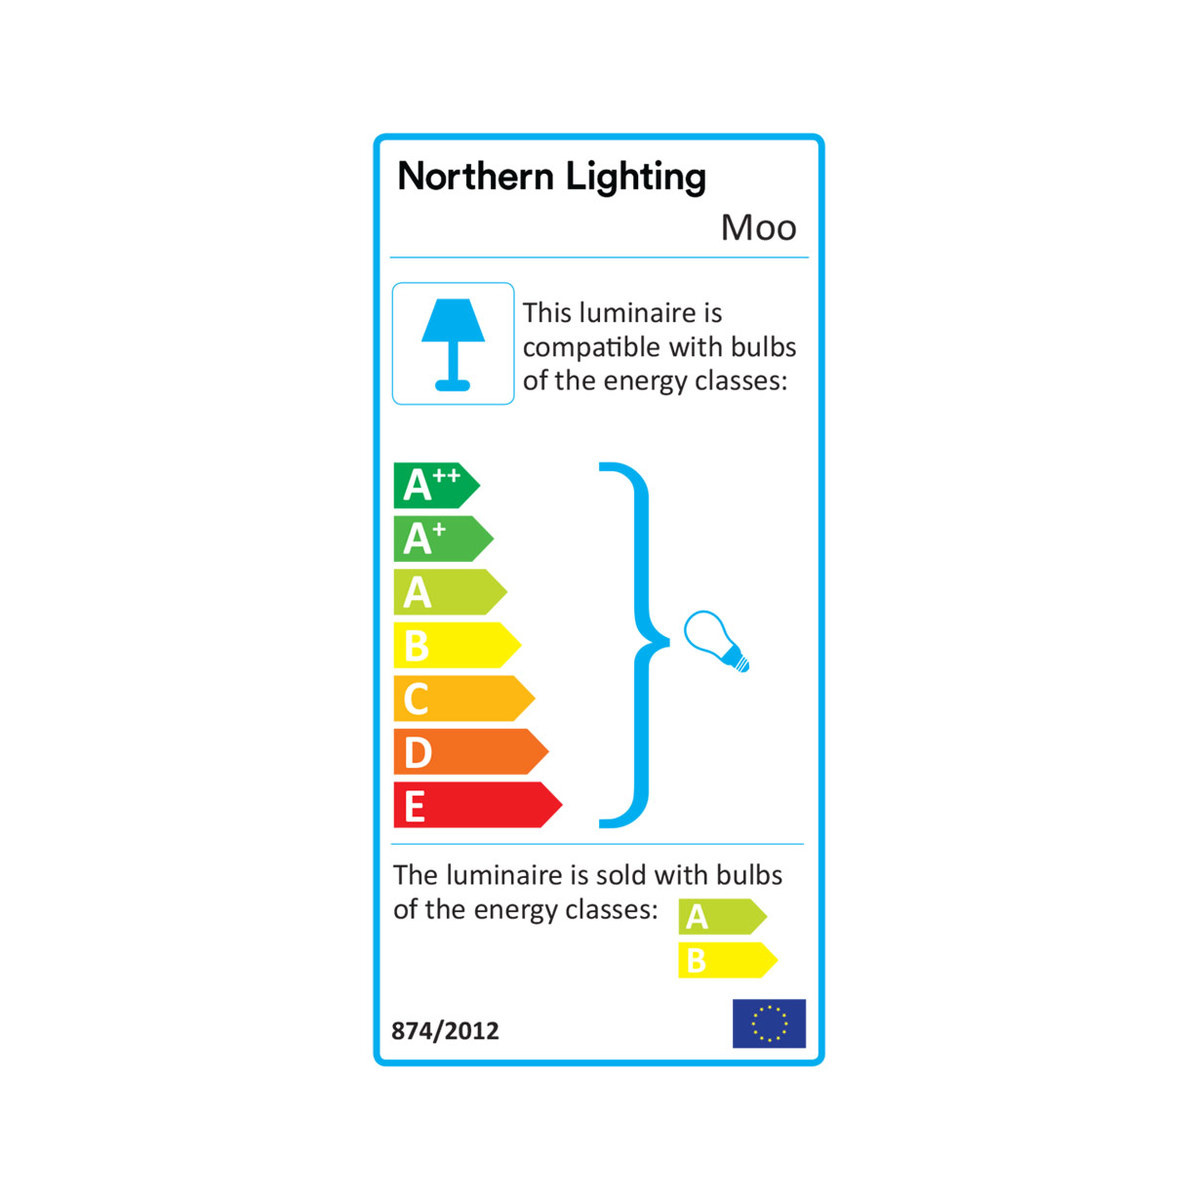 Moo lamp by Northern Lighting LOVEThESIGN